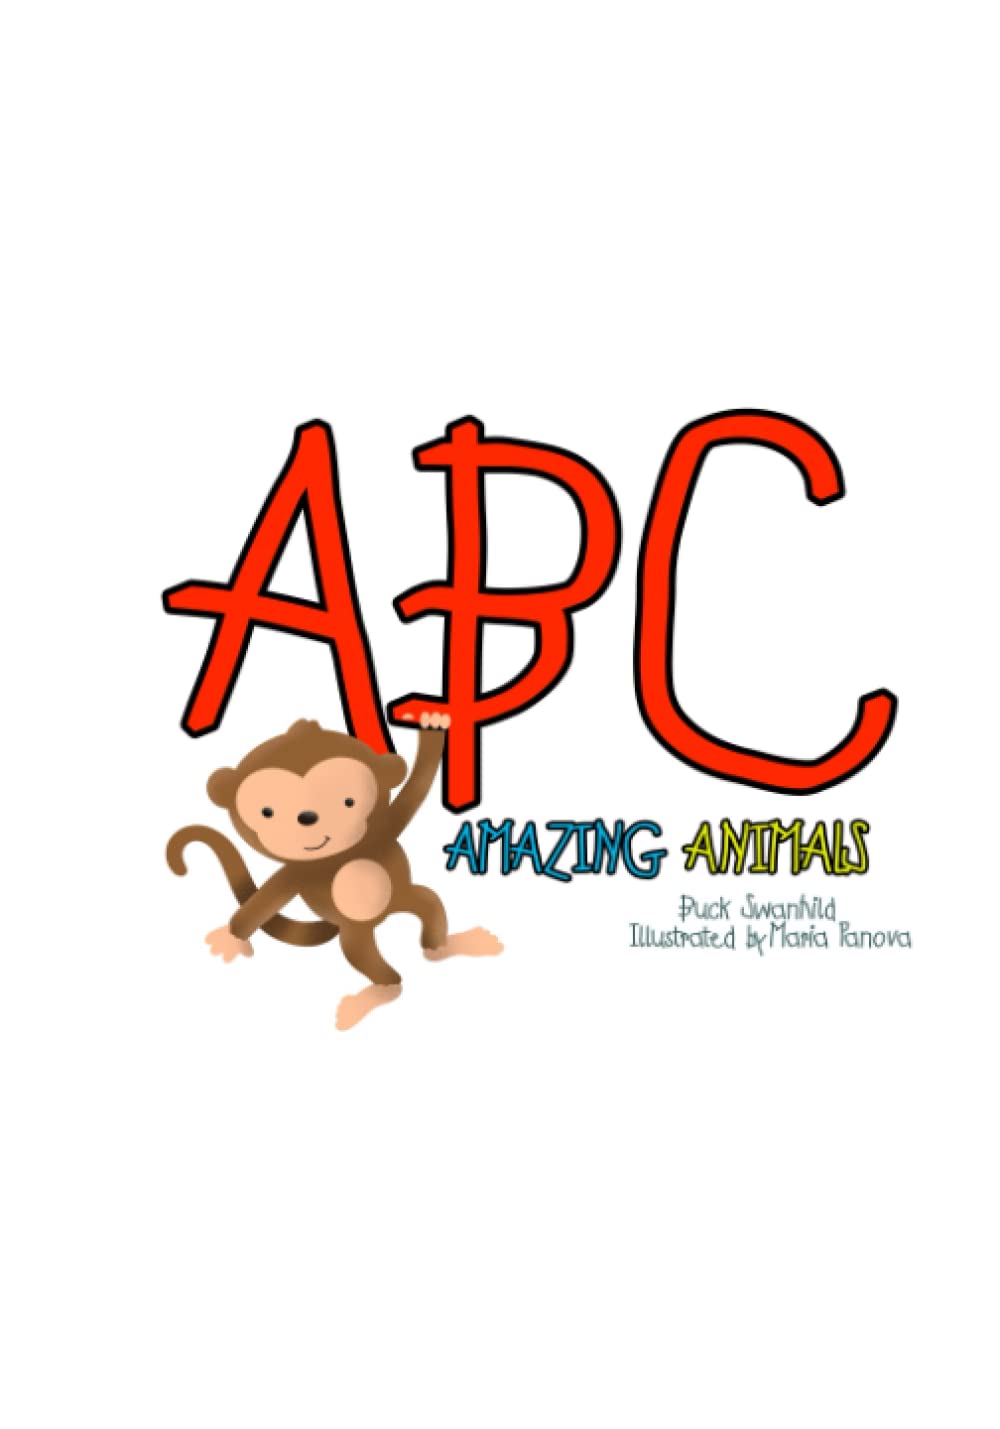 ABC Amazing Animals – A to Z Kids Books of Amazing Animals